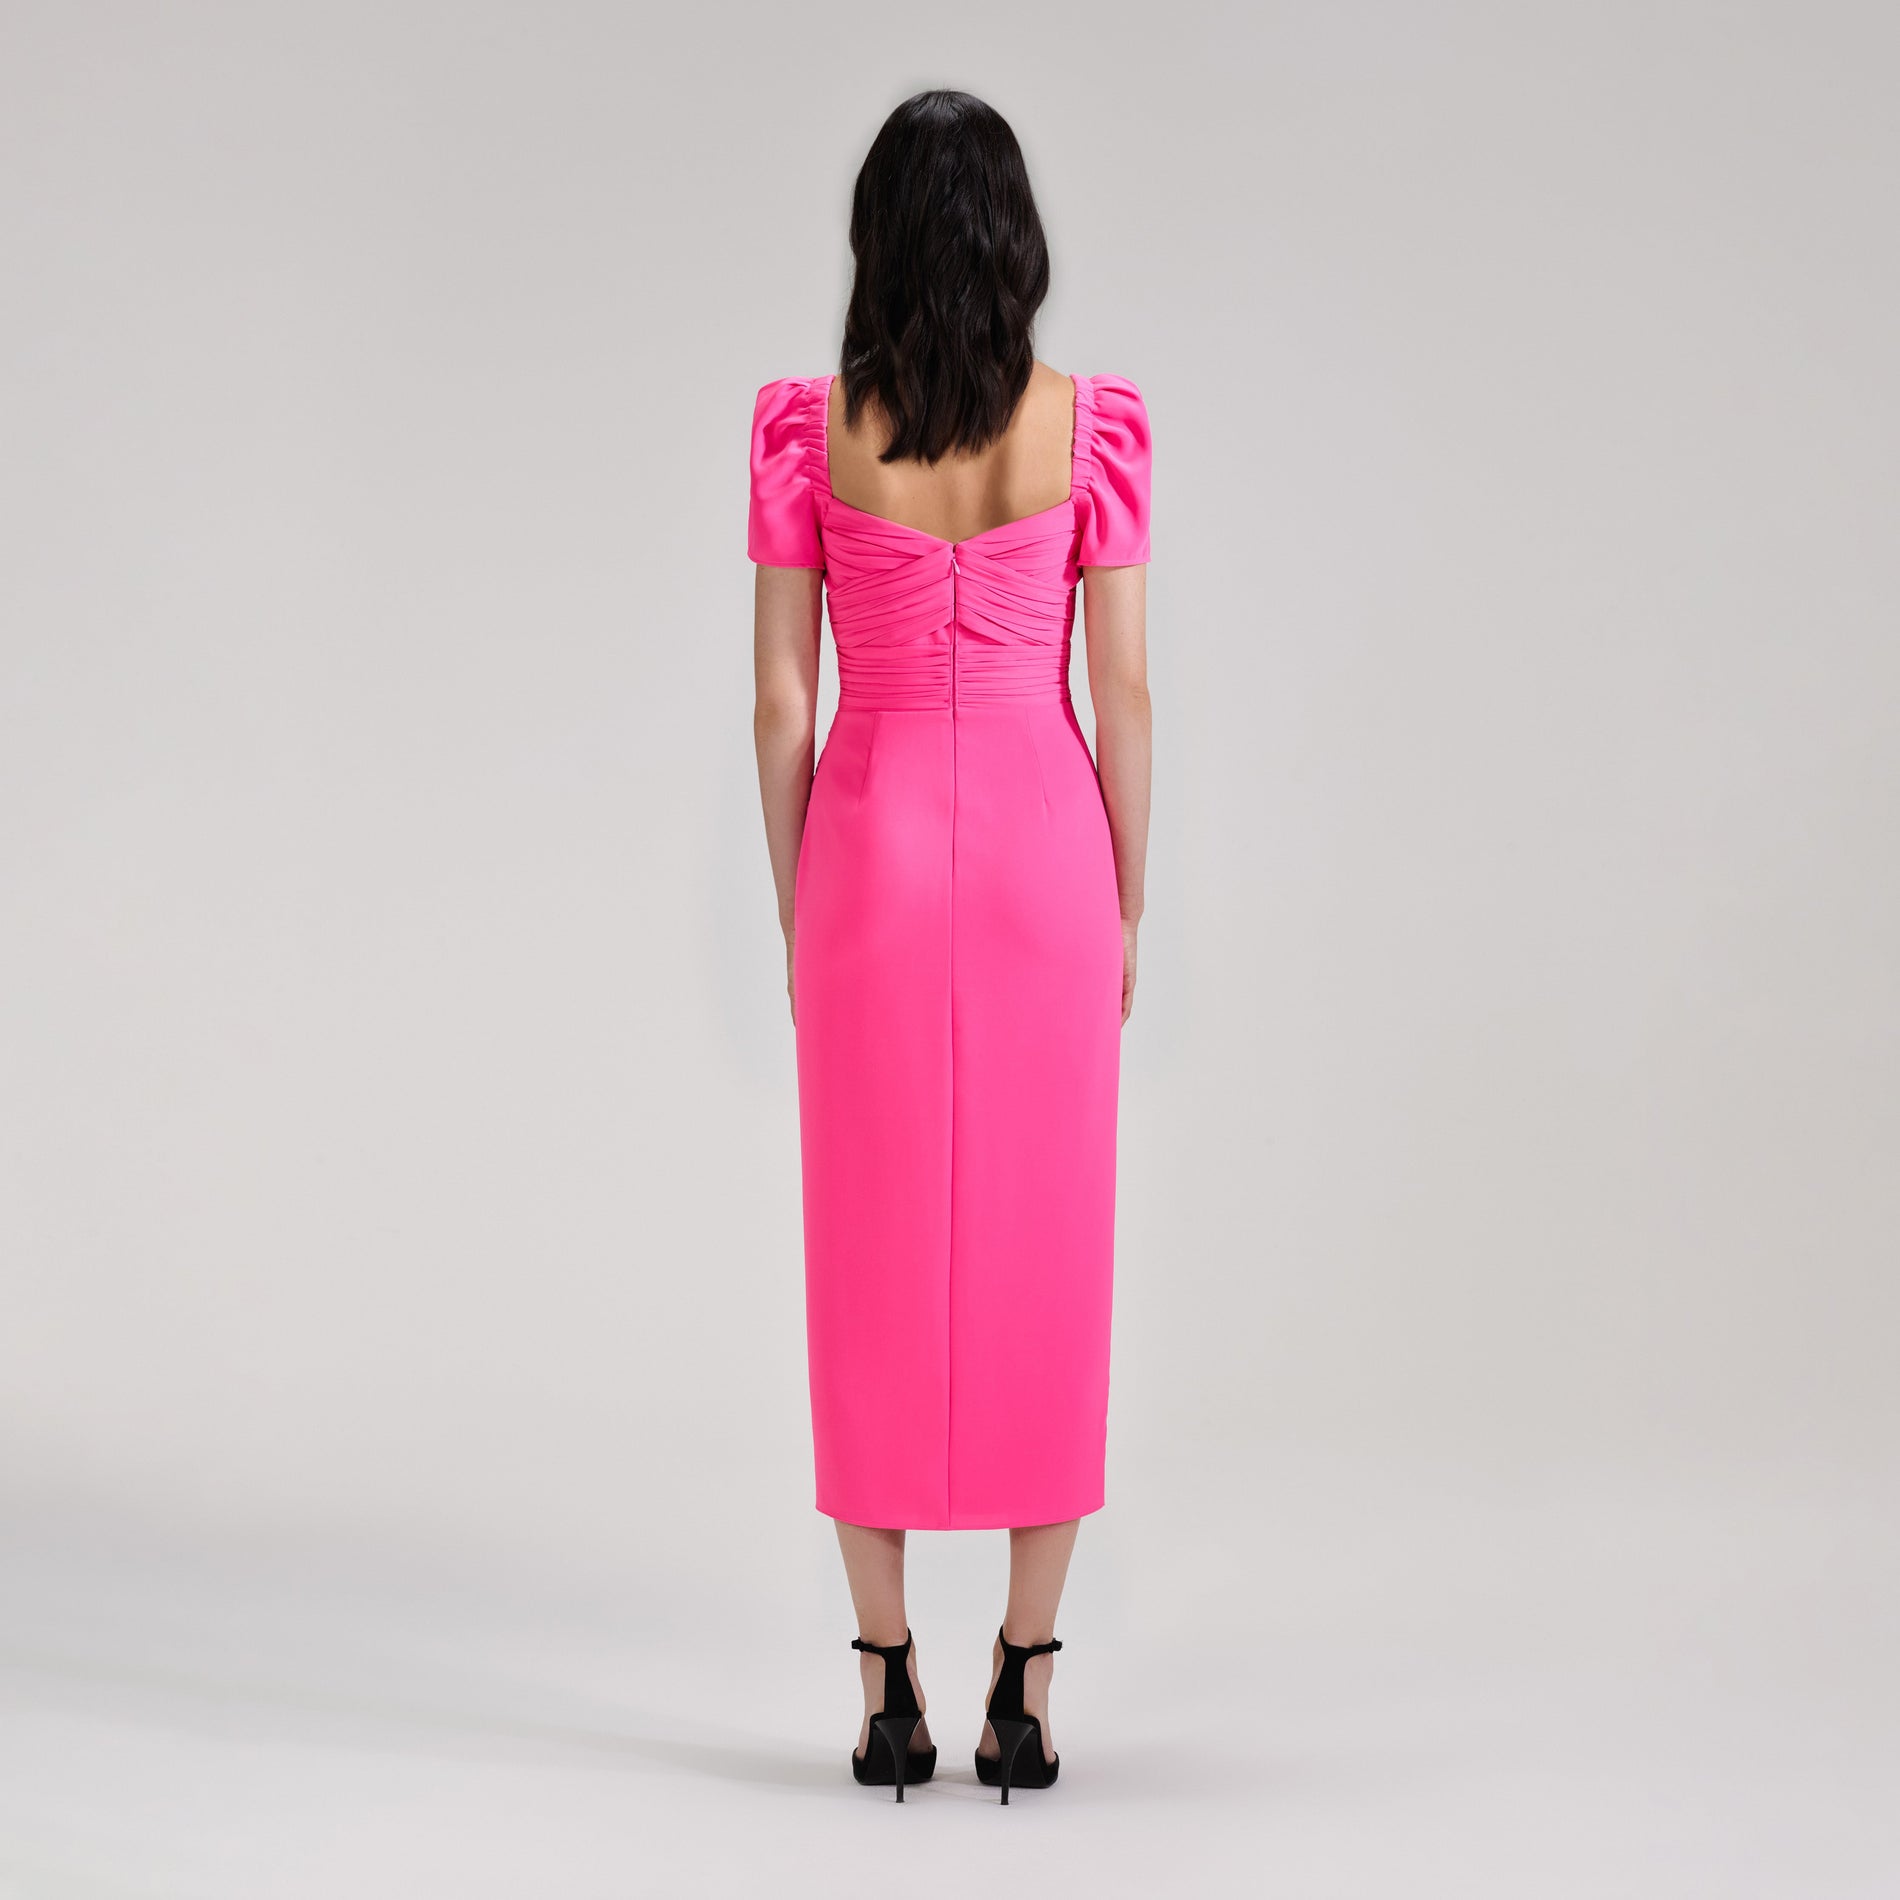 A woman wearing the Bright Pink Iris Midi Dress